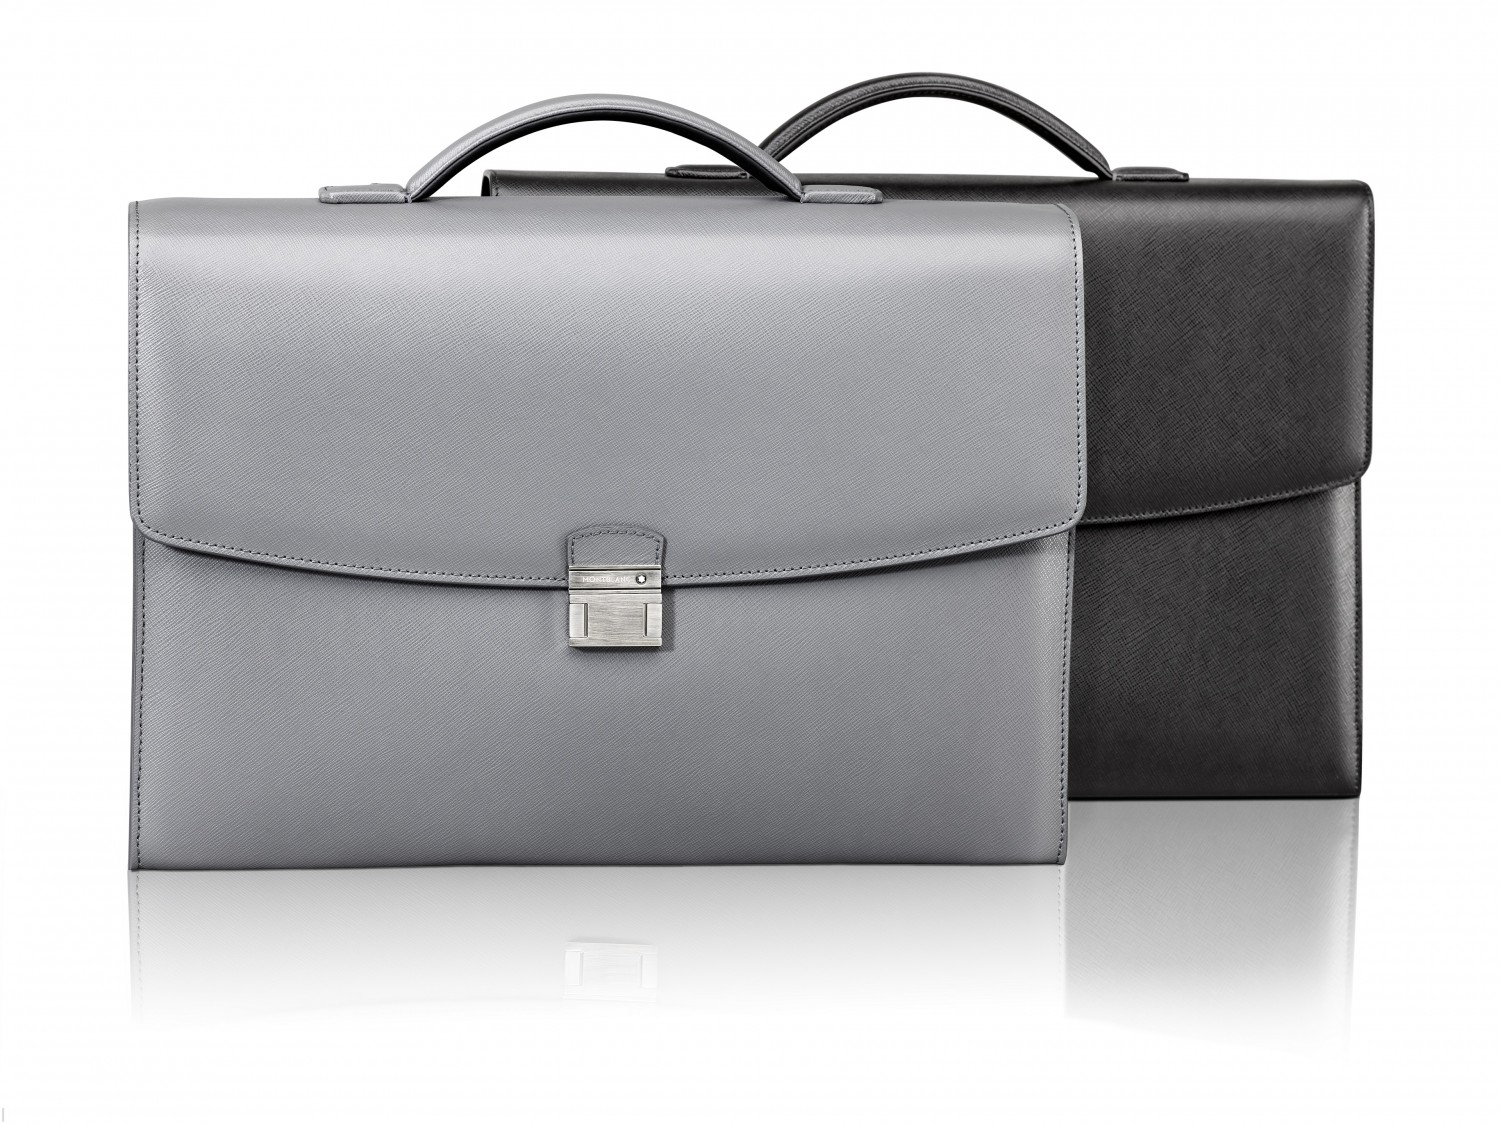 Montblanc Sartorial DGusset / SGusset Briefcases (HK$8,900 - 10,300)